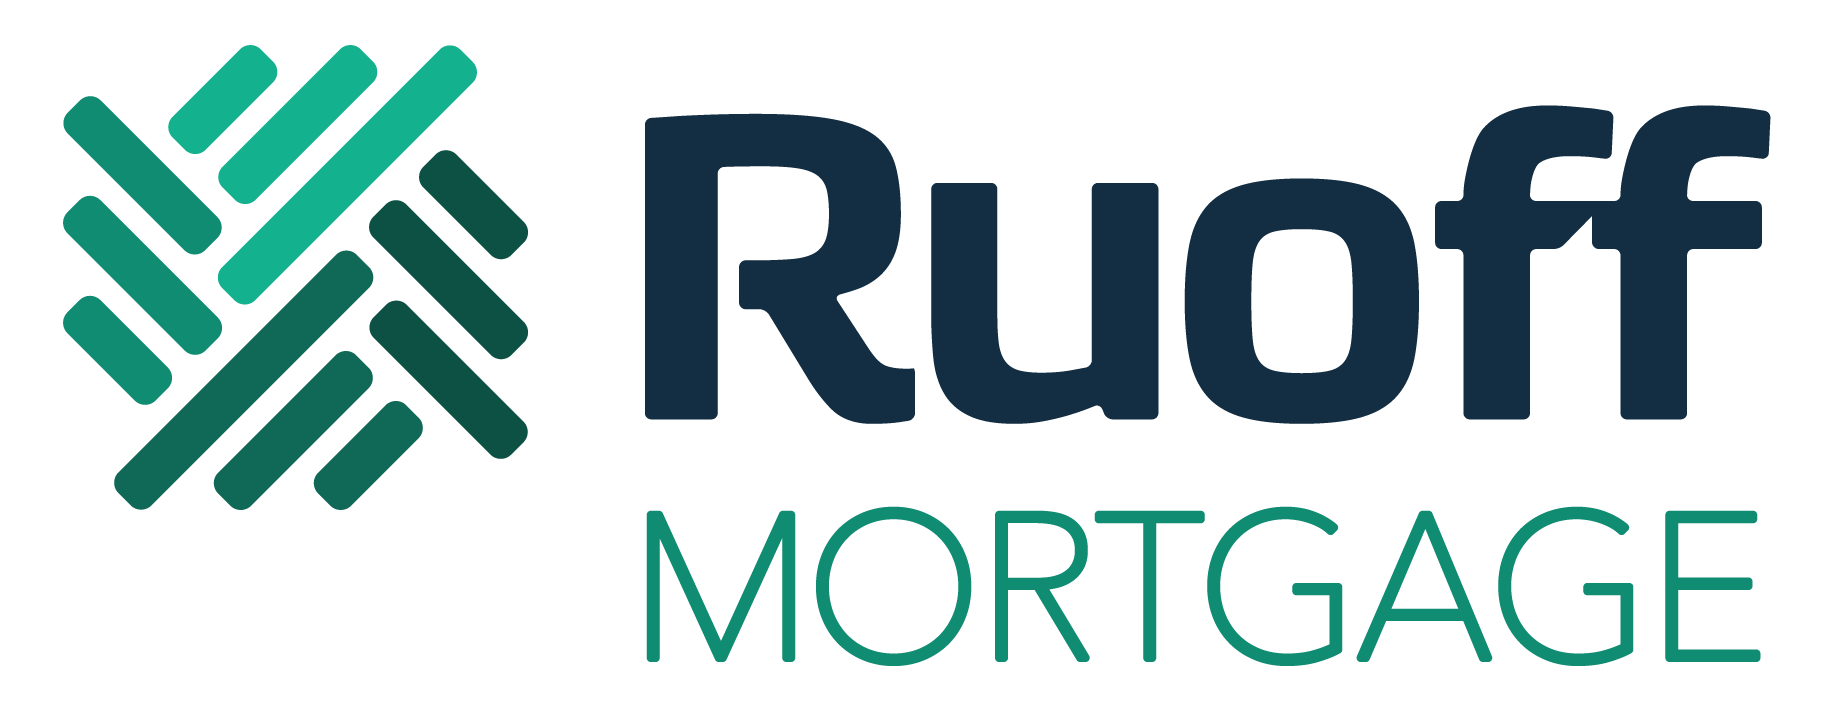 Ruoff Mortgage